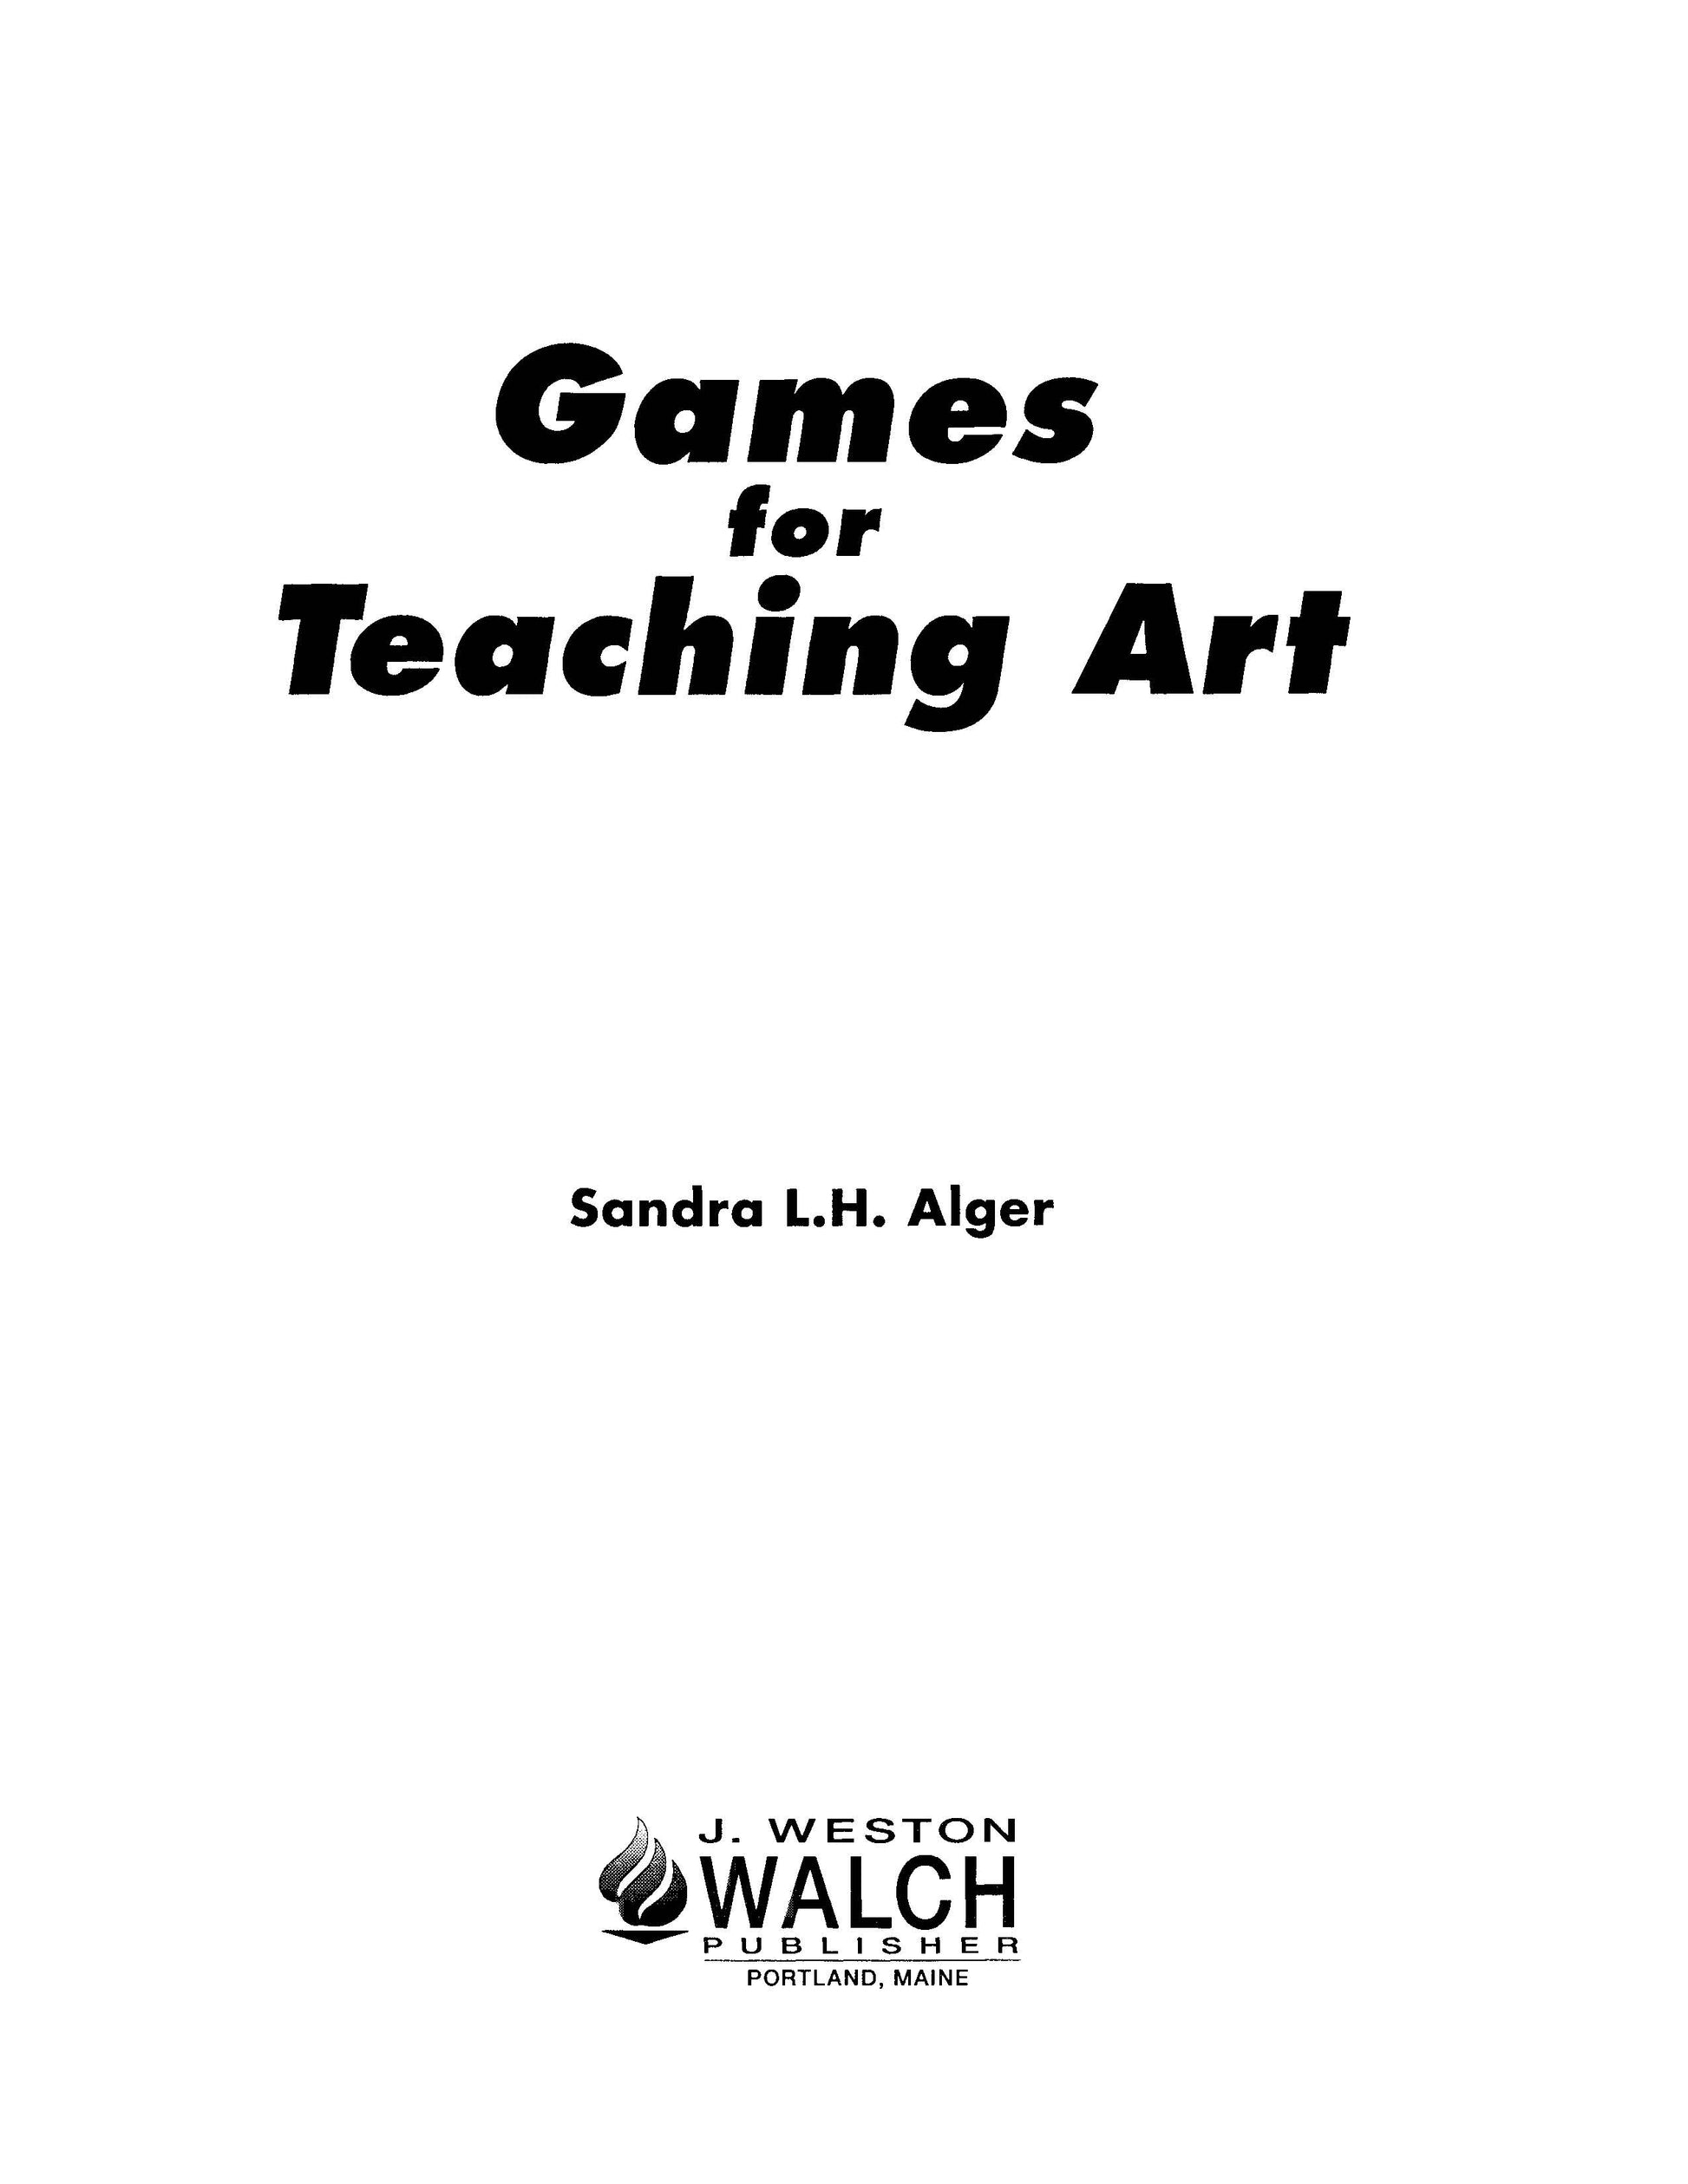 Bright Education Australia, Teacher Resources, Visual Art, Art, Book, drawing, painting, Games for Teaching Art